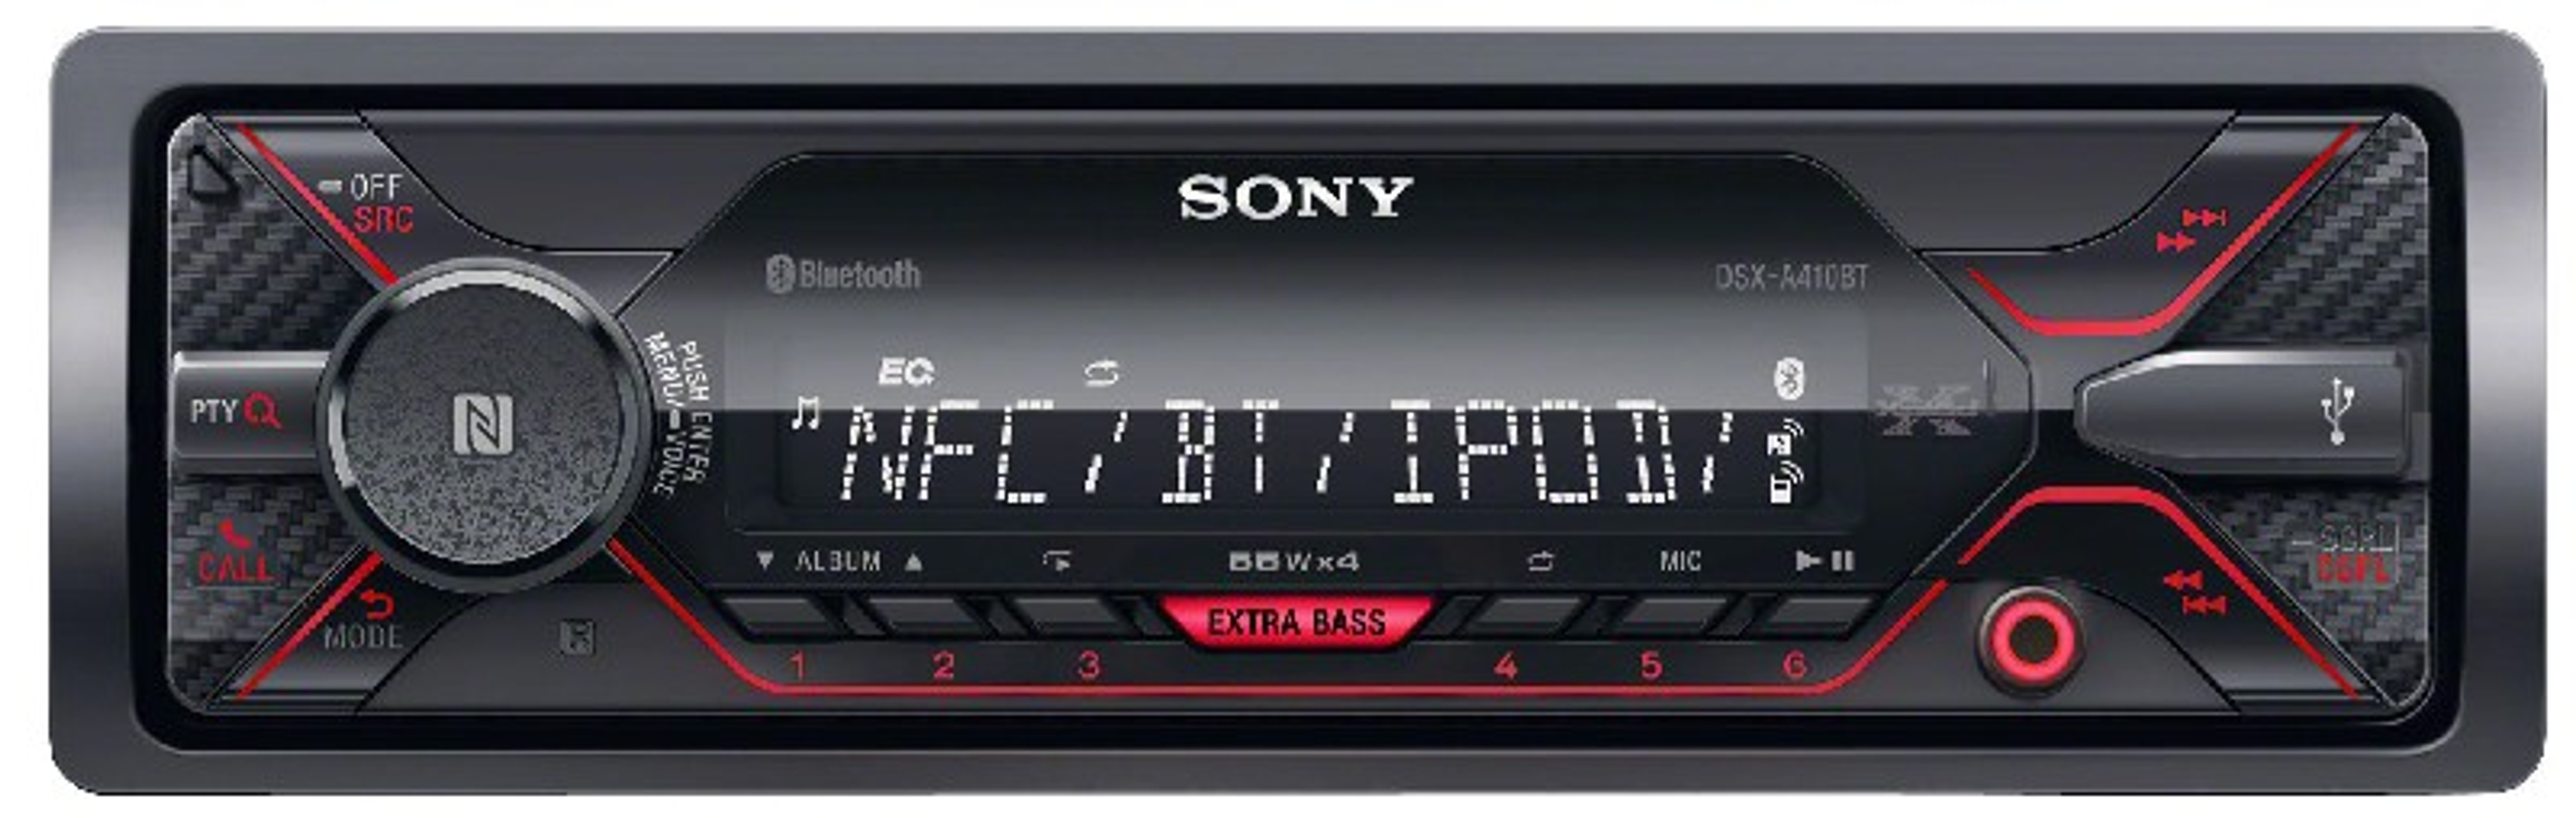 SONY DSX-A 410 BT Autoradio DIN, Watt 55 1